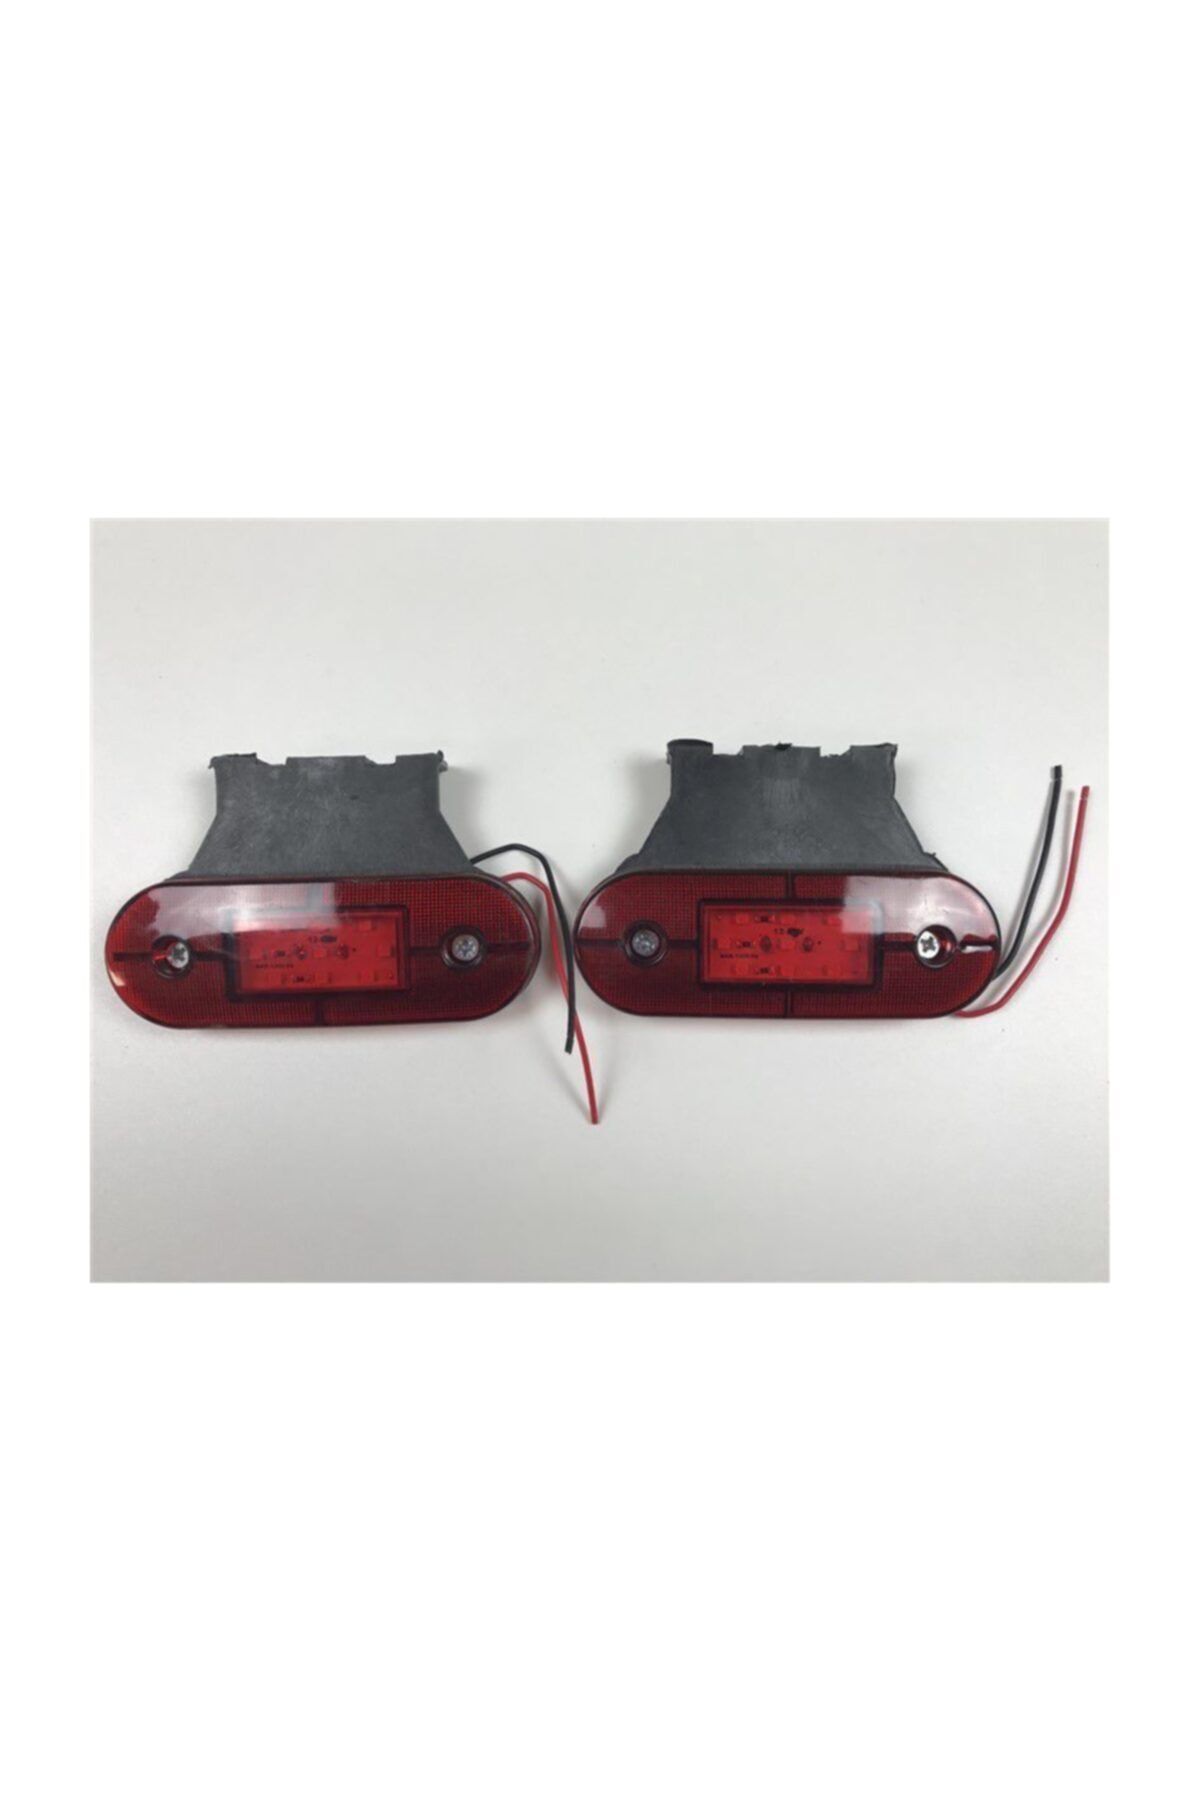 REPLAX Kırmızı Kasa Lamba 12v Sallamalı 6 Led Dorse Lambası Tas12vkd (2 Adet Fiyatıdır)